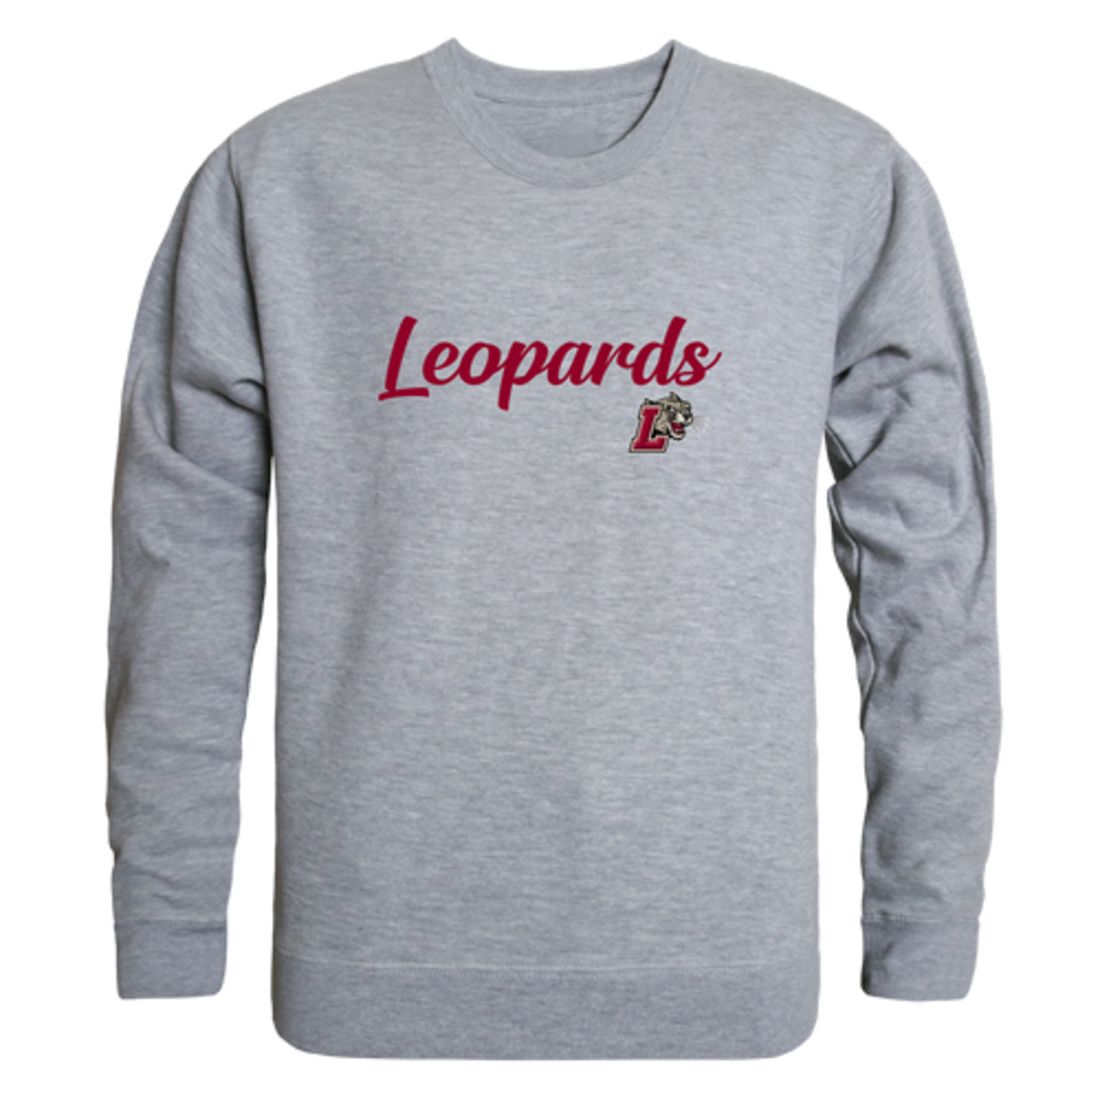 Lafayette College Leopards Script Crewneck Pullover Sweatshirt Sweater Black-Campus-Wardrobe